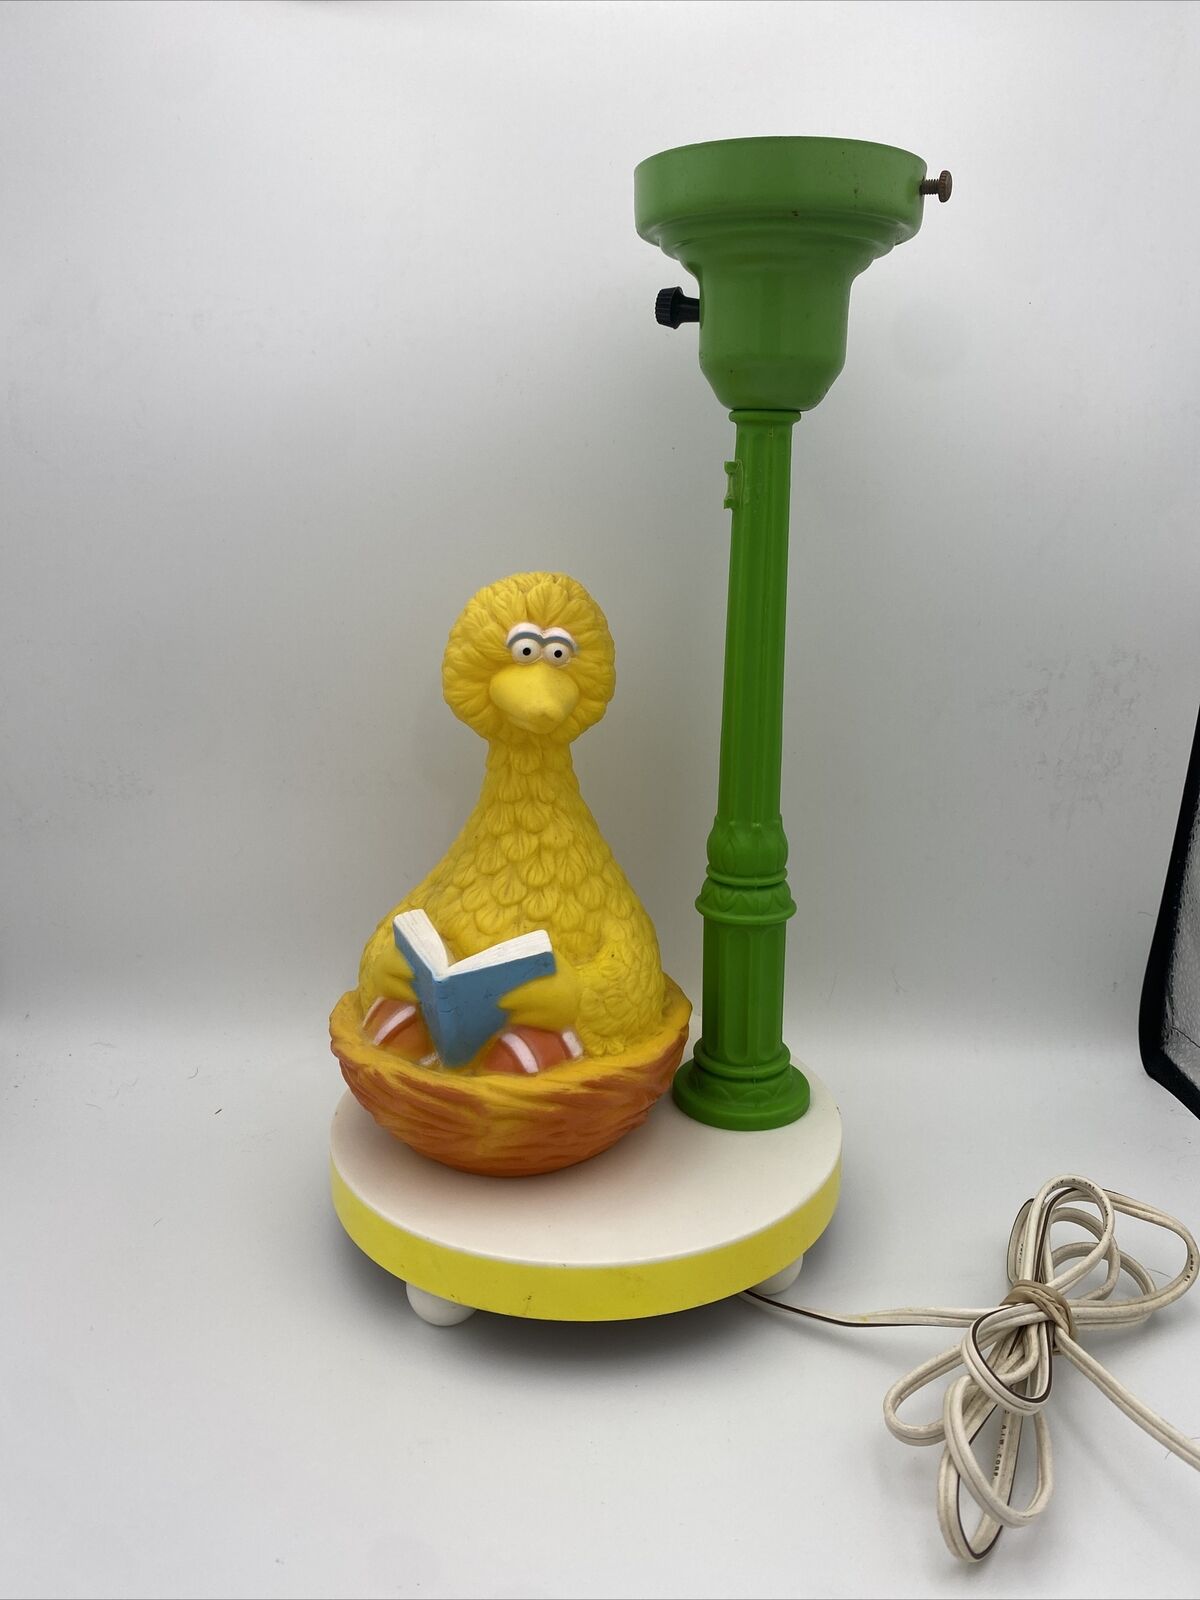 Vintage Rare 1970's Sesame Street Big Bird Lamp - Tested And Works